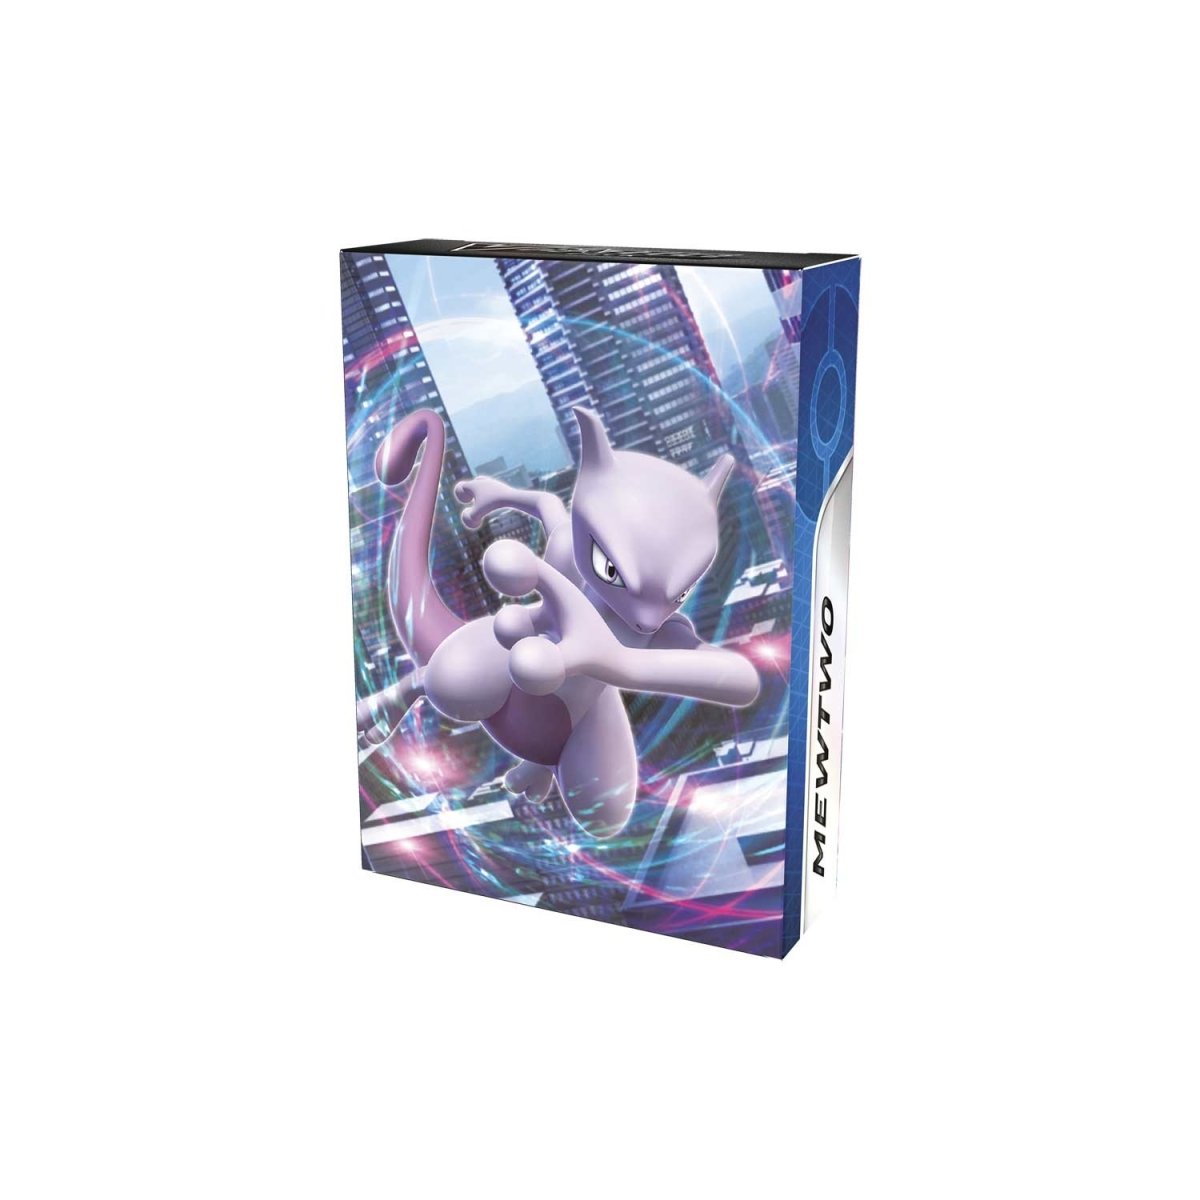 Pokemon Trading Card Game (TCG) Deck Shield Mewtwo ver.2 – NintendoSoup